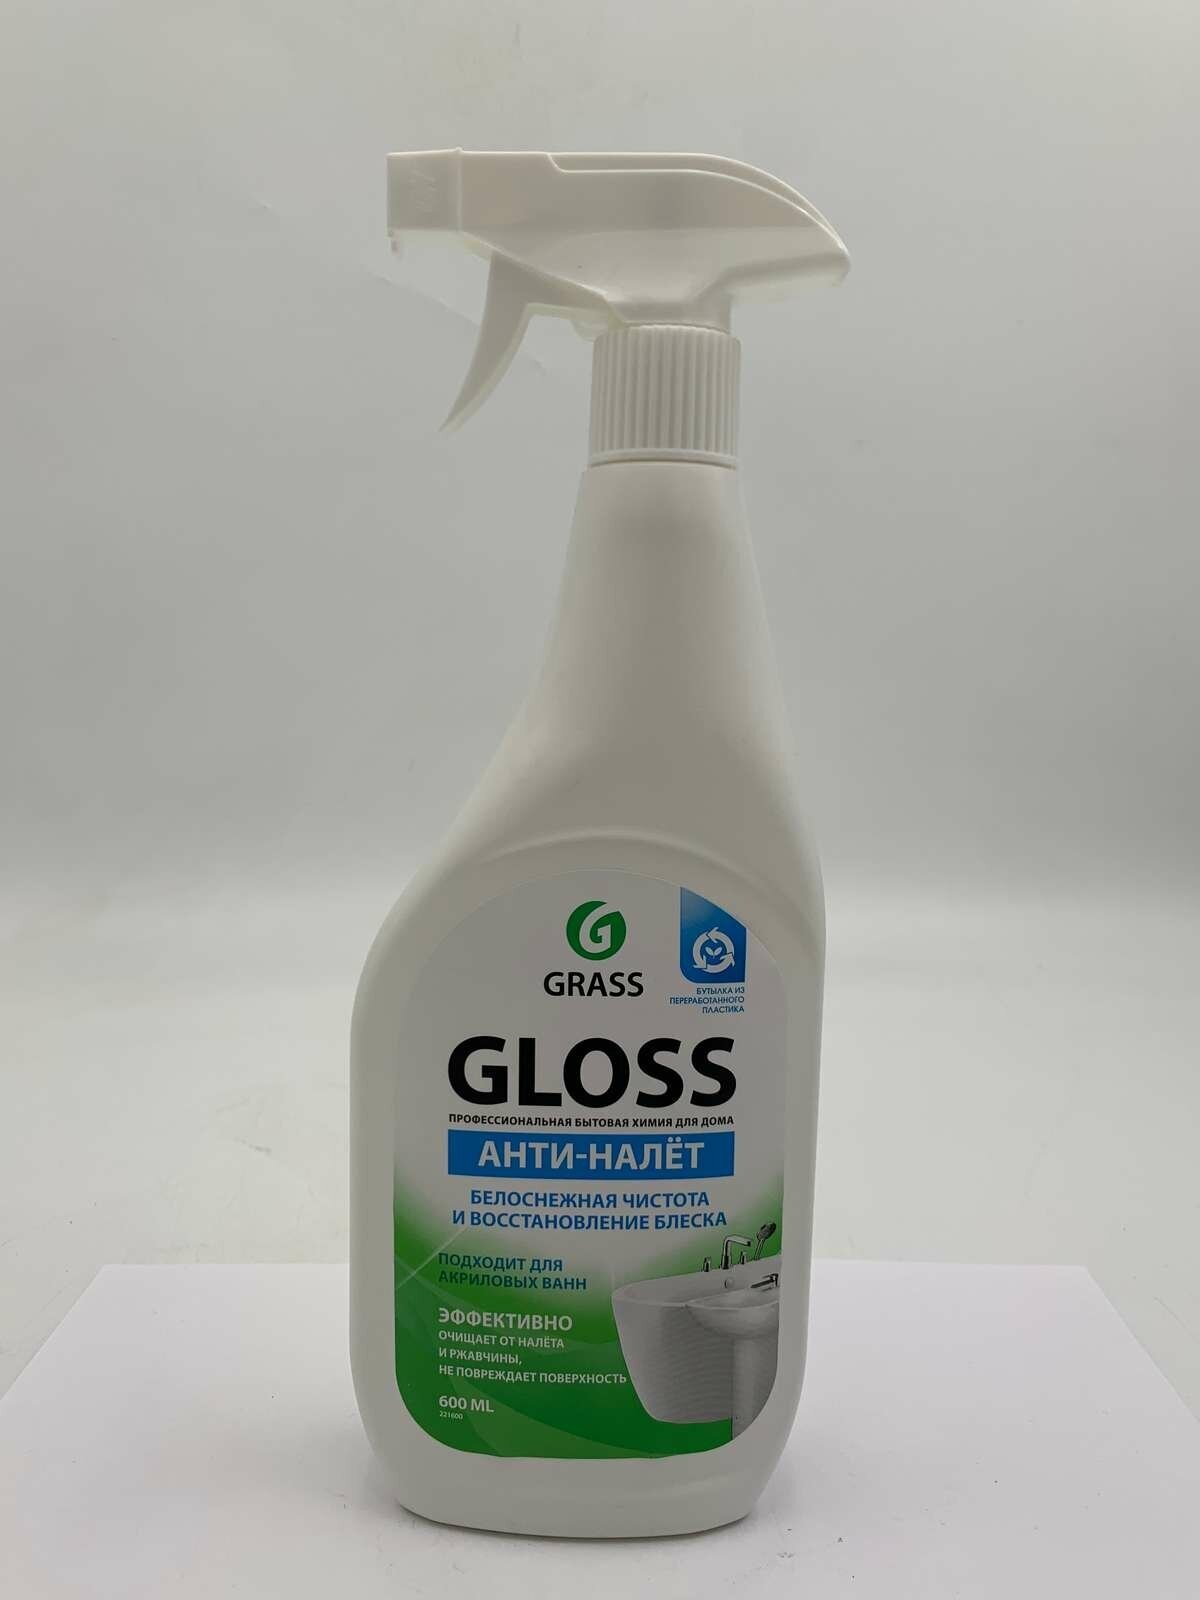 GRASS Чистящее средство для ванной комнаты Grass Gloss, 600 мл - фотография № 20